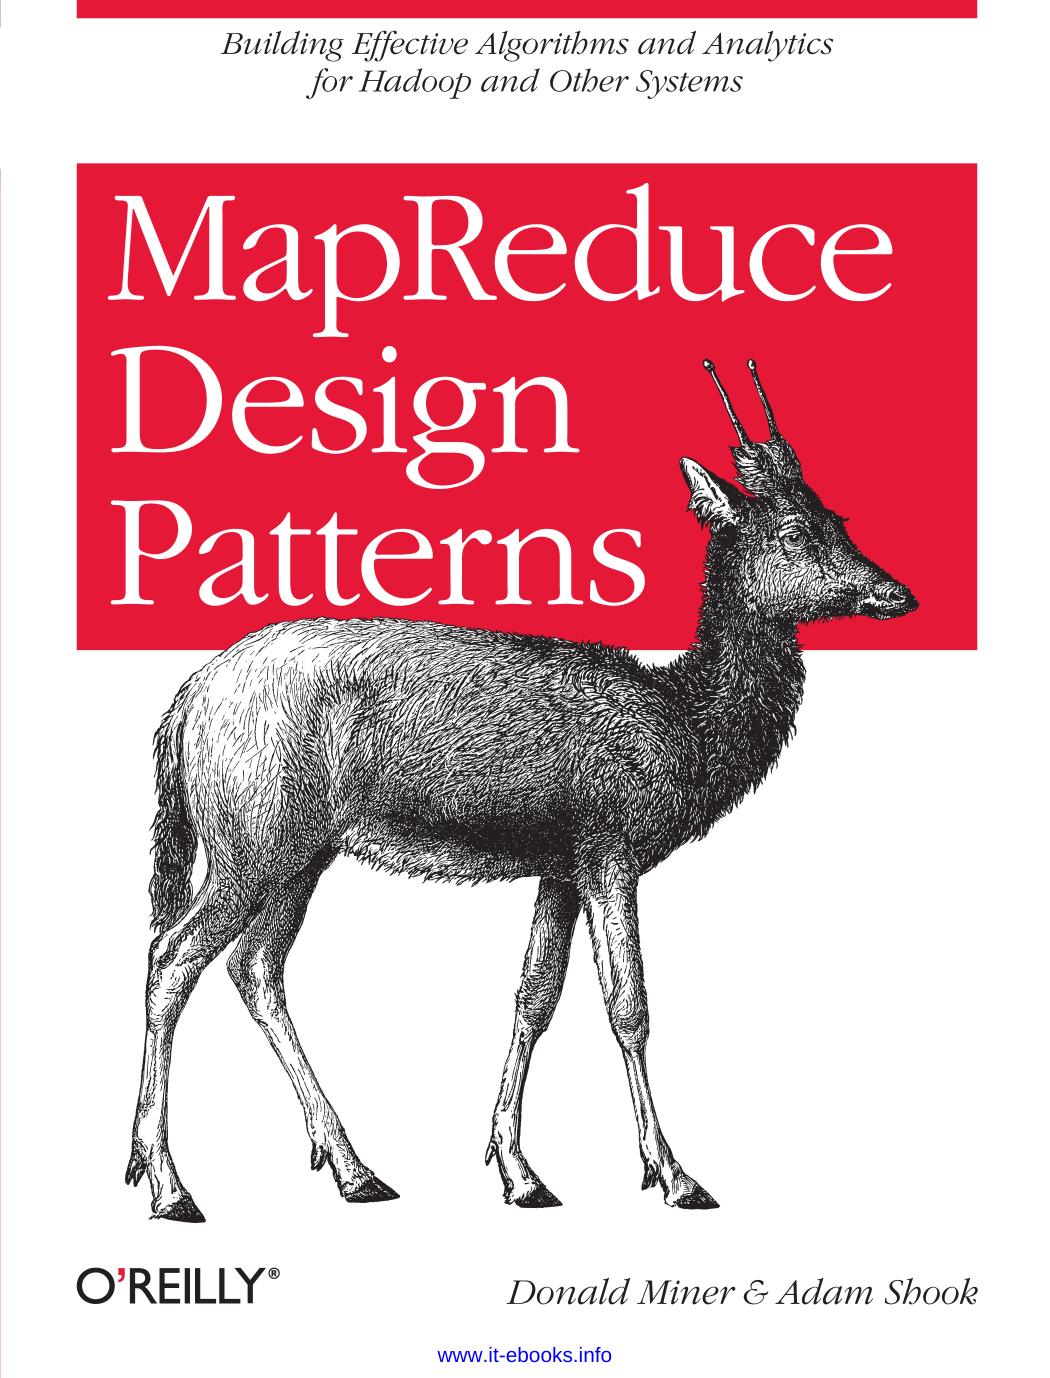 MapReduce Design Patterns by Donald Miner & Adam Shook